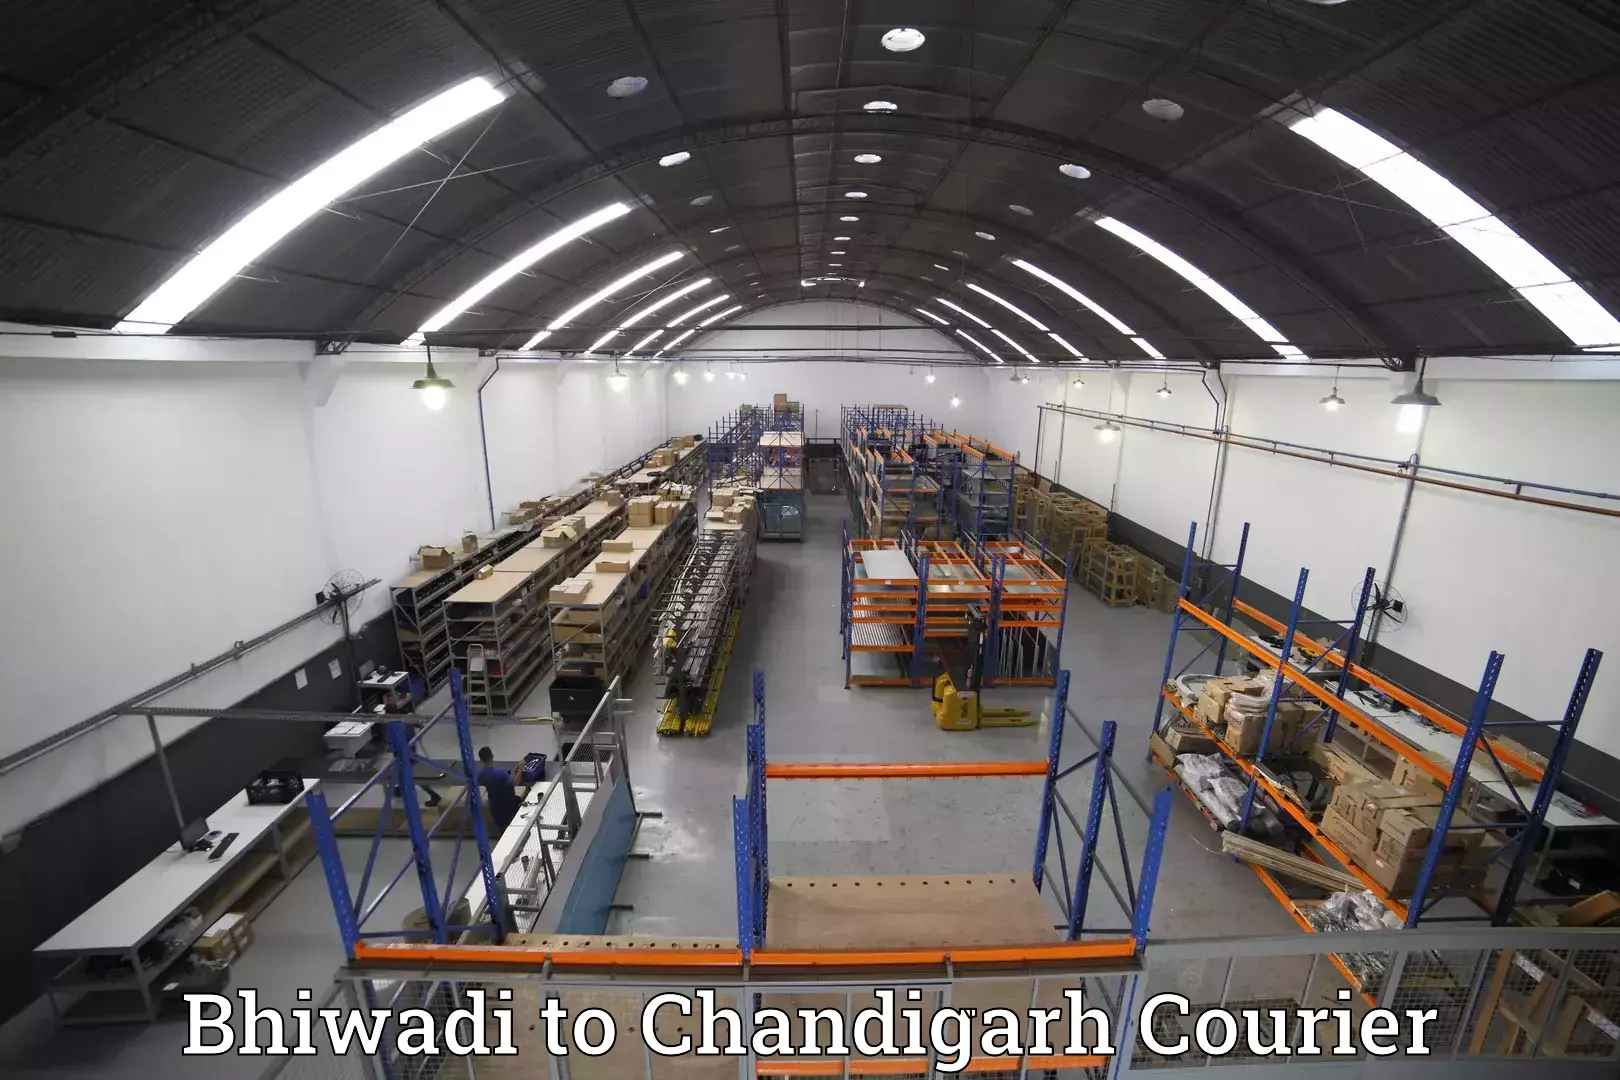 Luggage transport company Bhiwadi to Chandigarh